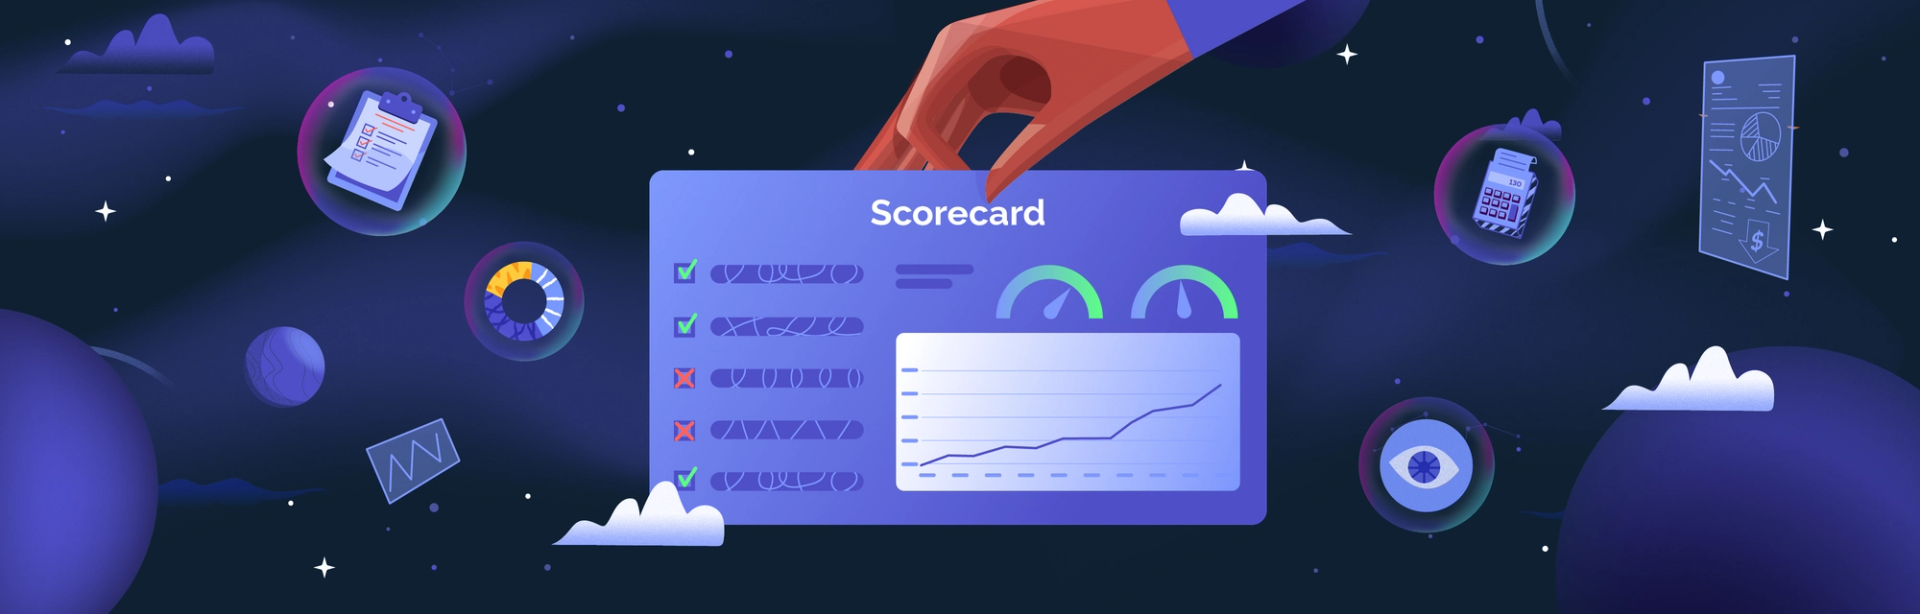 An illustration showing a scorecard for design partners